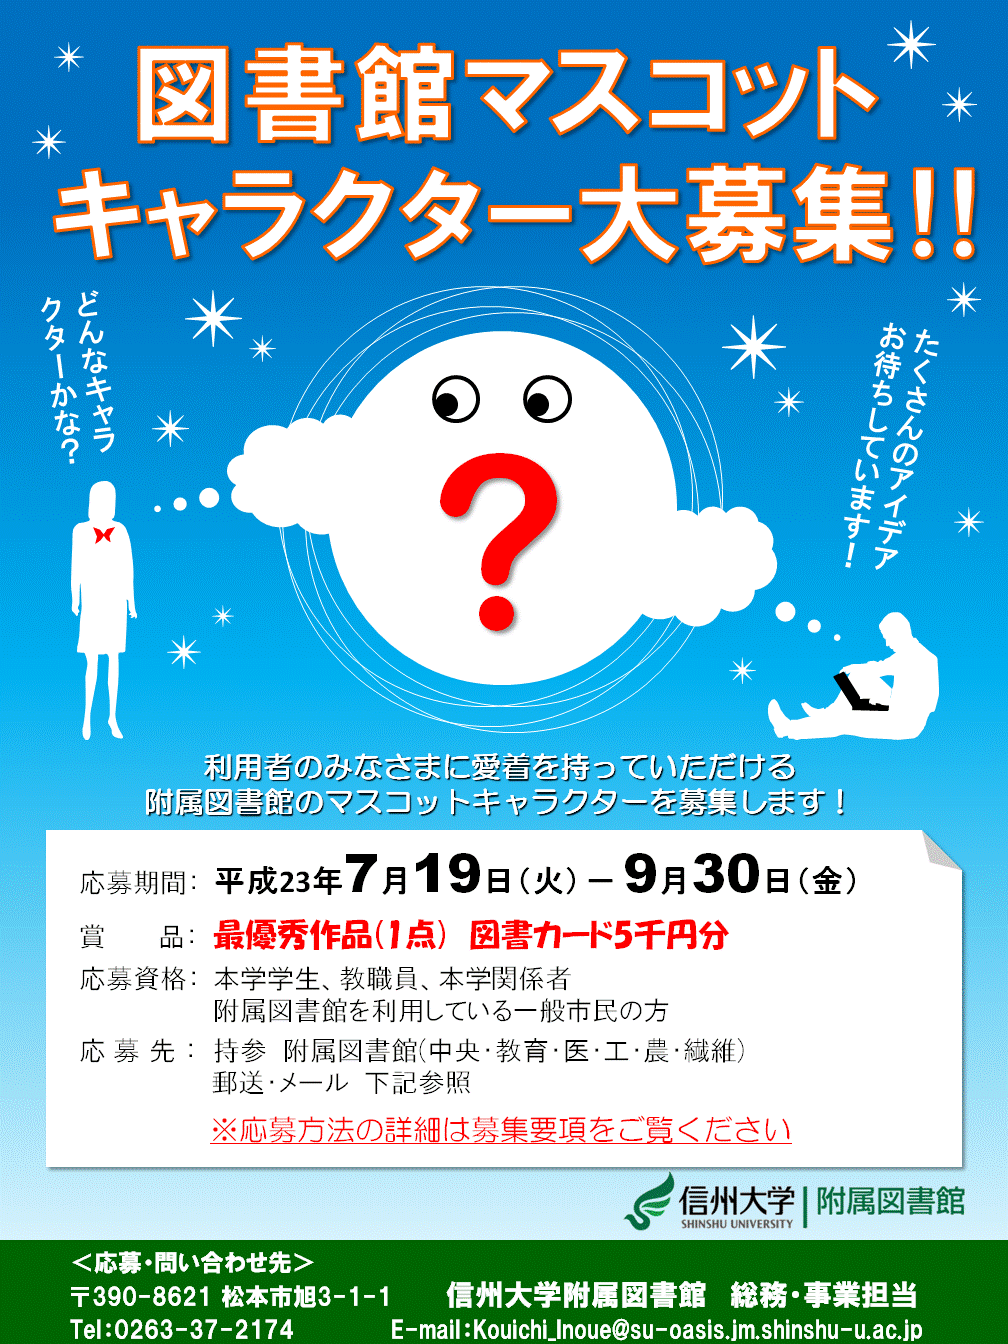 http://www.shinshu-u.ac.jp/institution/library/uploadimg/mascot_poster.gif